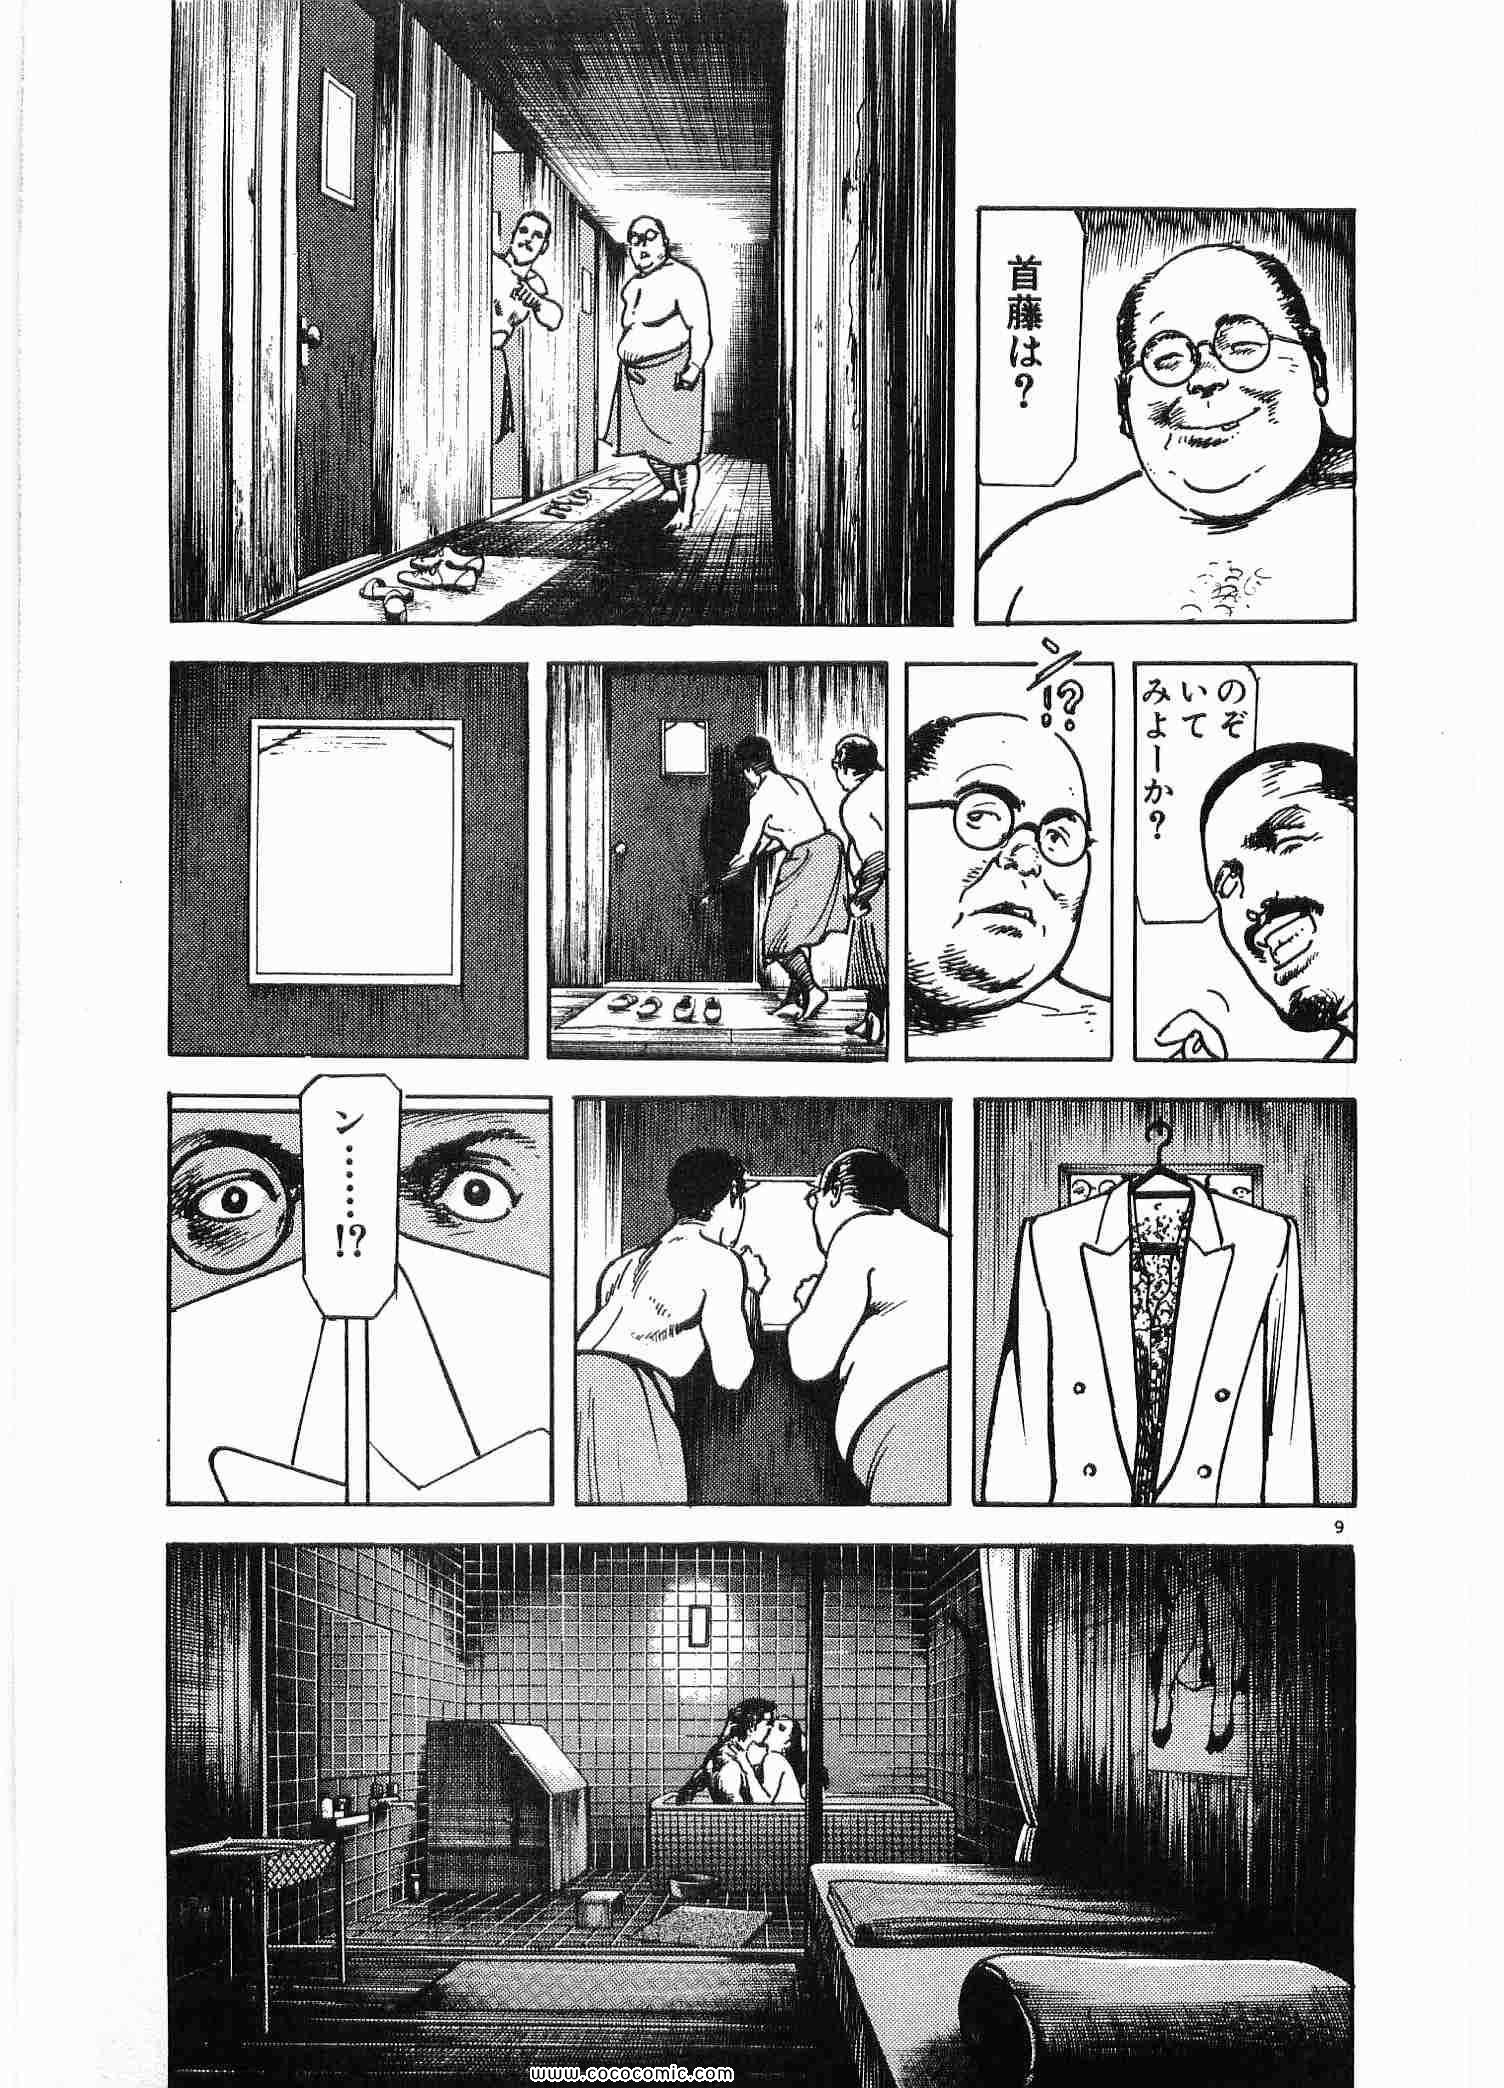 《BOX暗い箱(日文)》漫画 BOX暗い箱 01卷